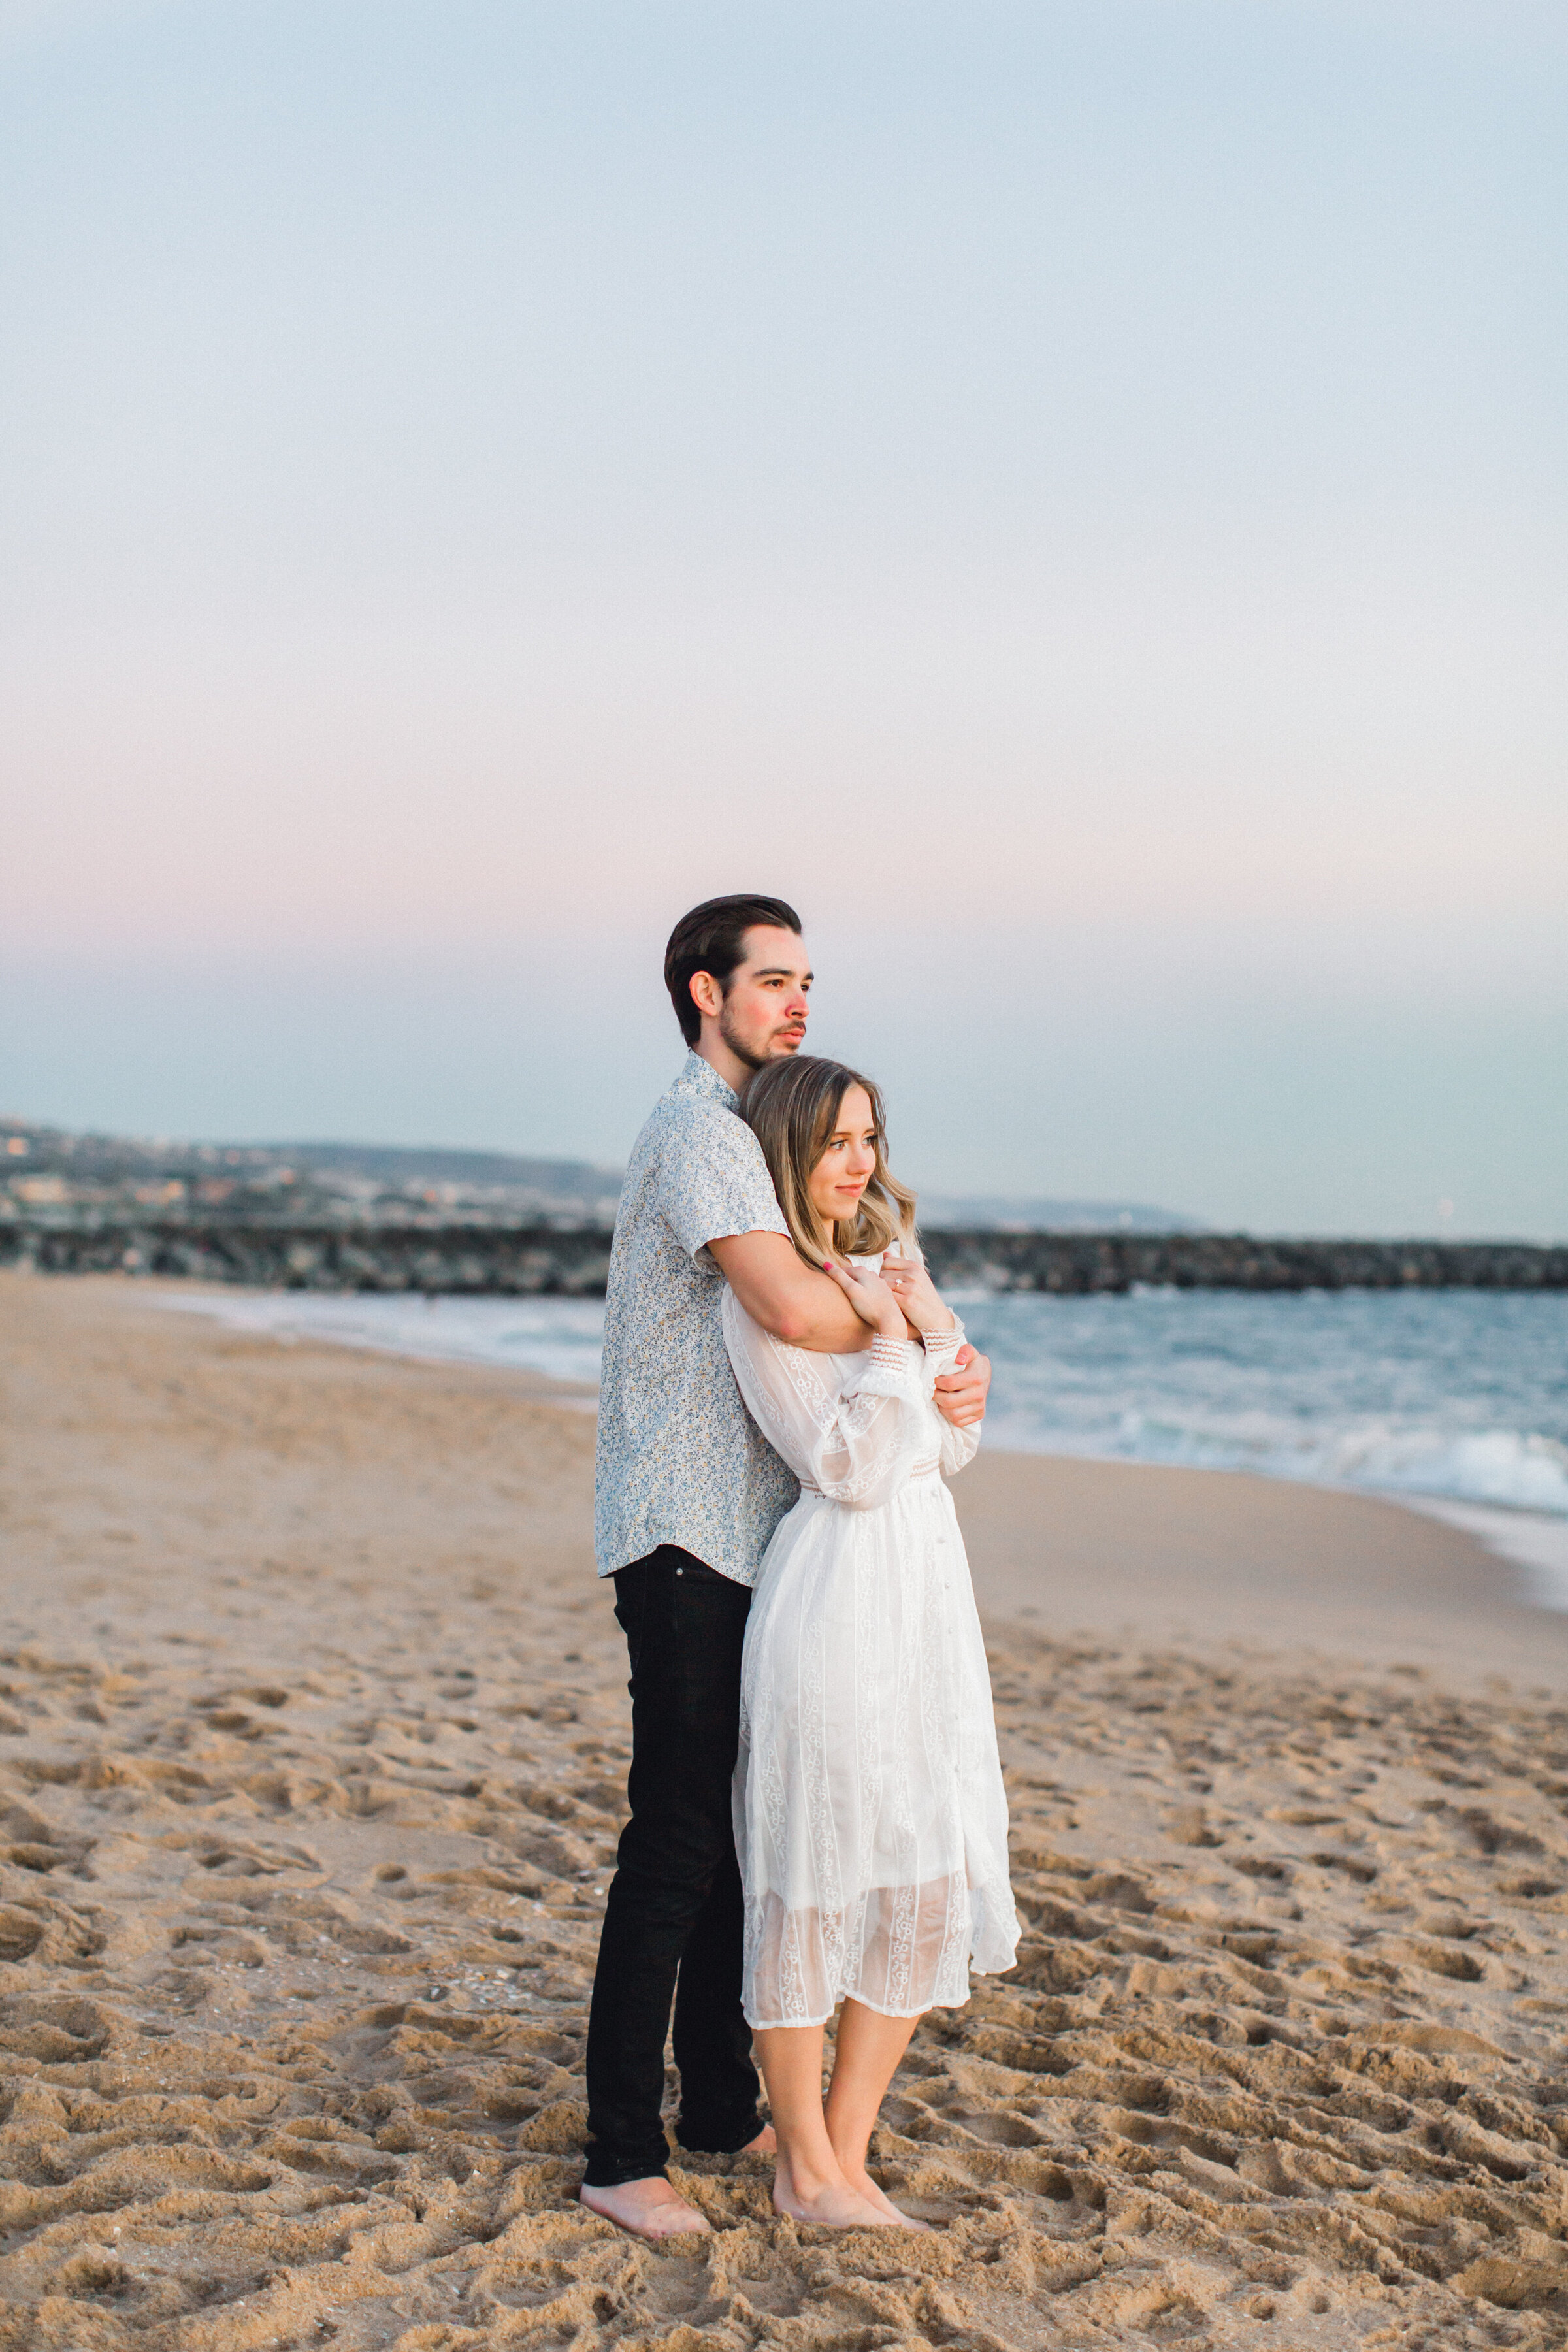 Max + Victoria | Engagement, Newport Beach (258 of 276)